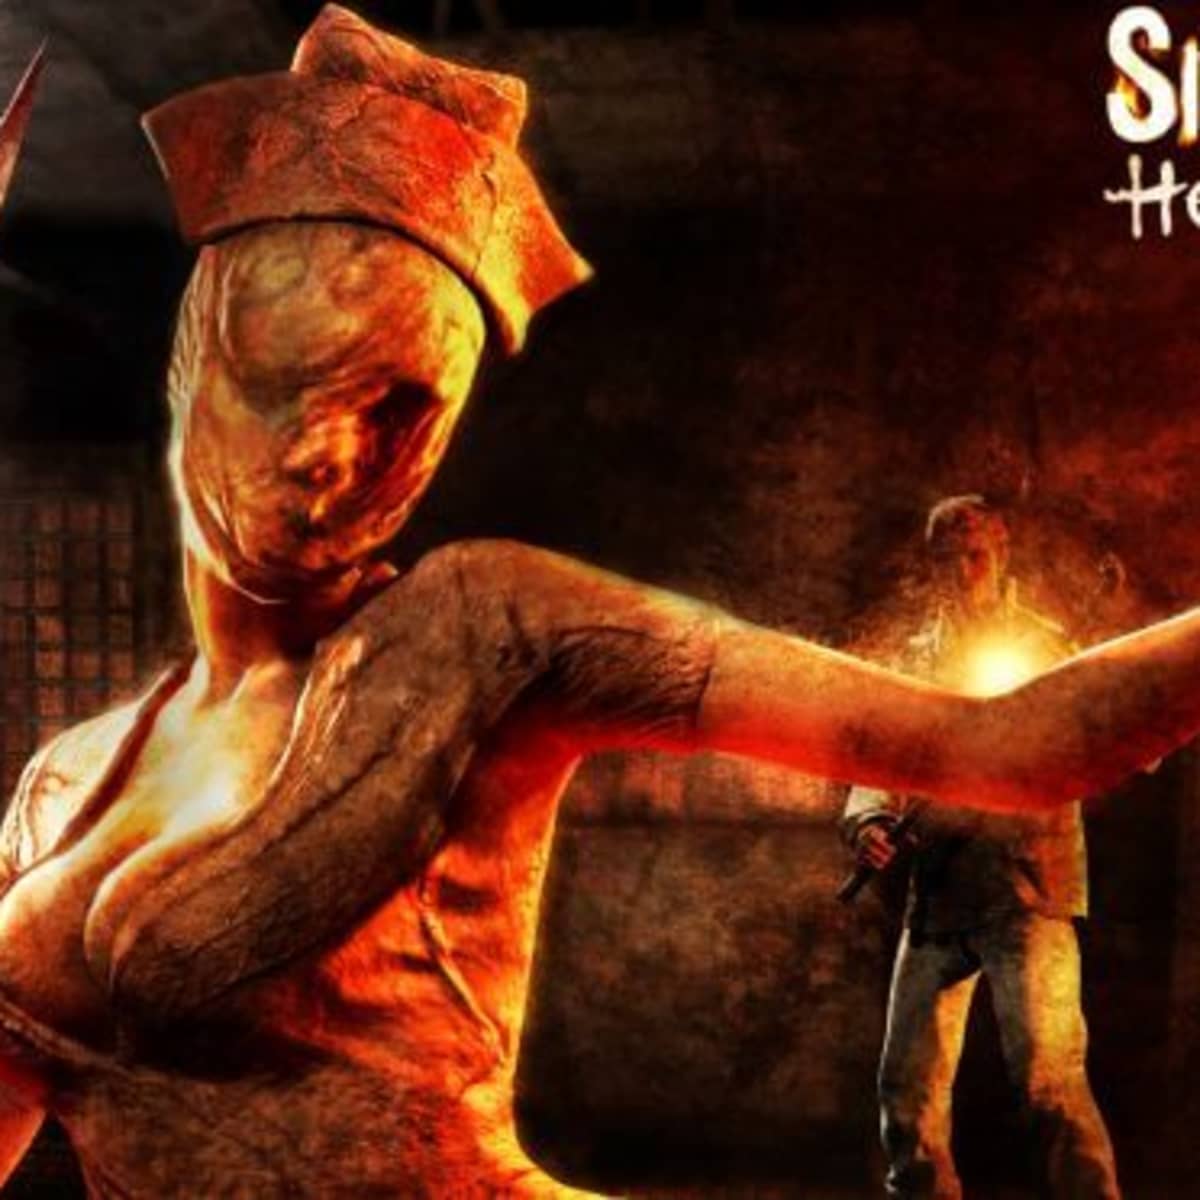 Australia Bans Silent Hill: Homecoming